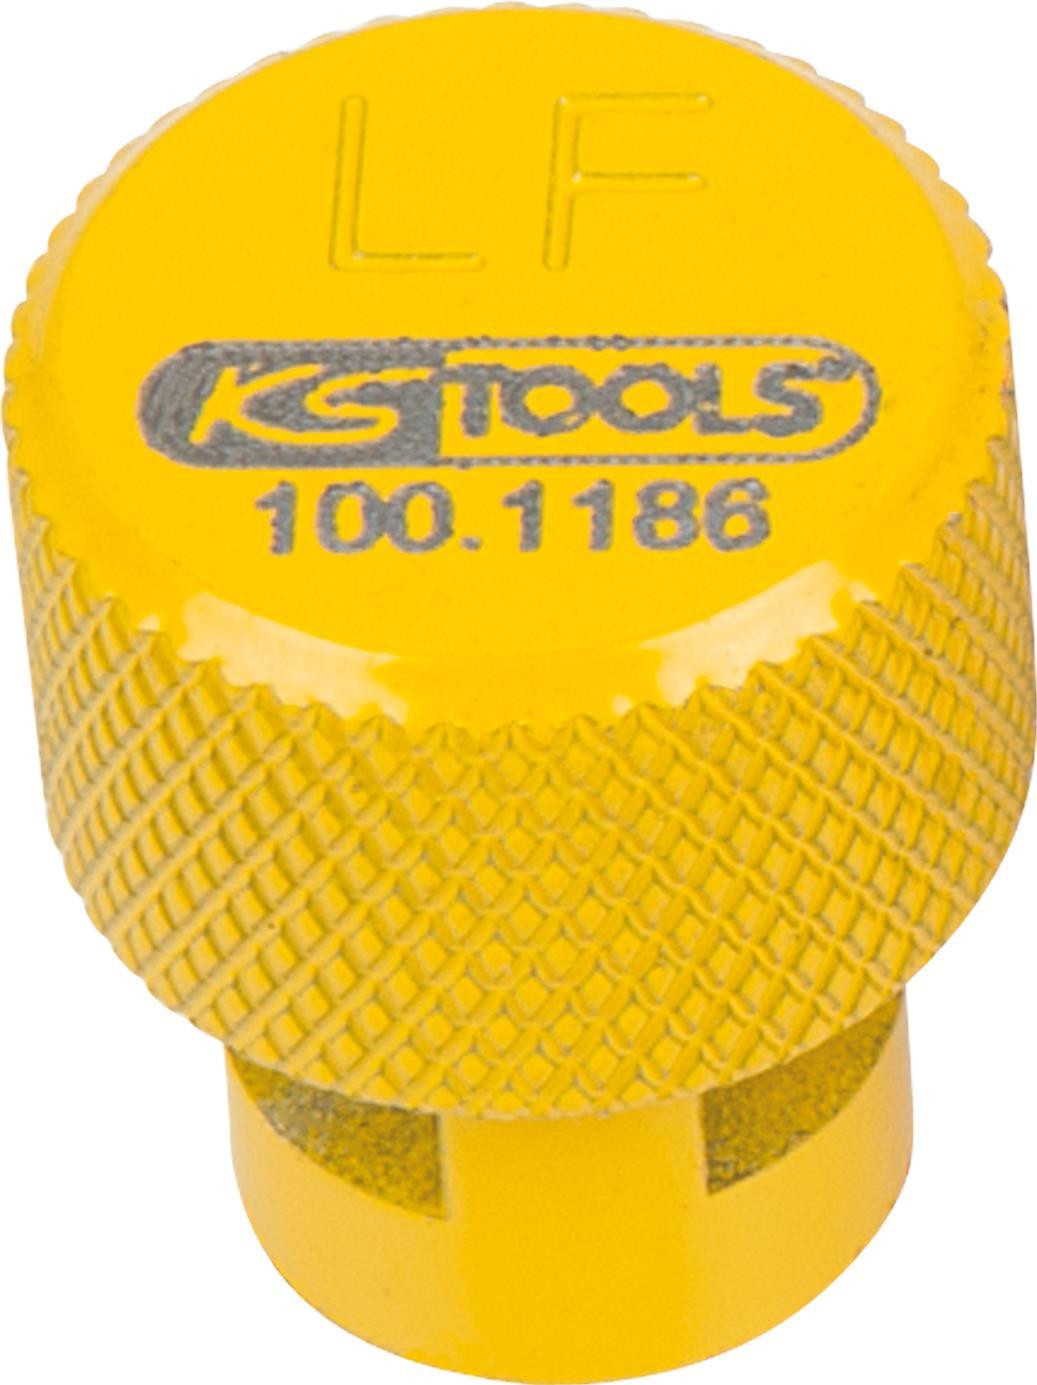 KS TOOLS RDKS / TPMS Reifenentlüfter, gelb, links vorn (100.1186)